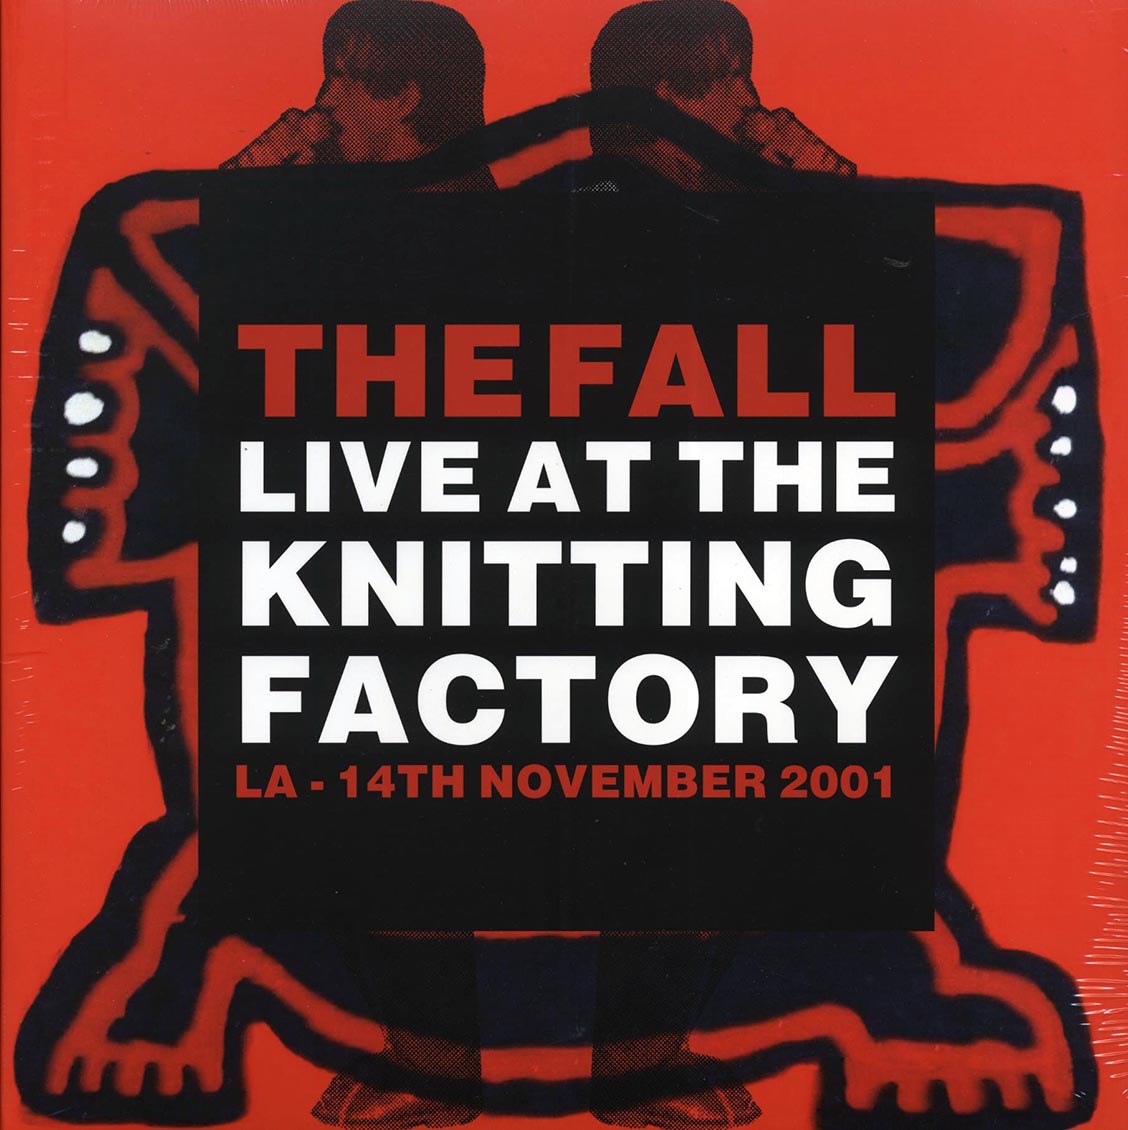 The Fall - Live At The Knitting Factory LA, 14th November 2001